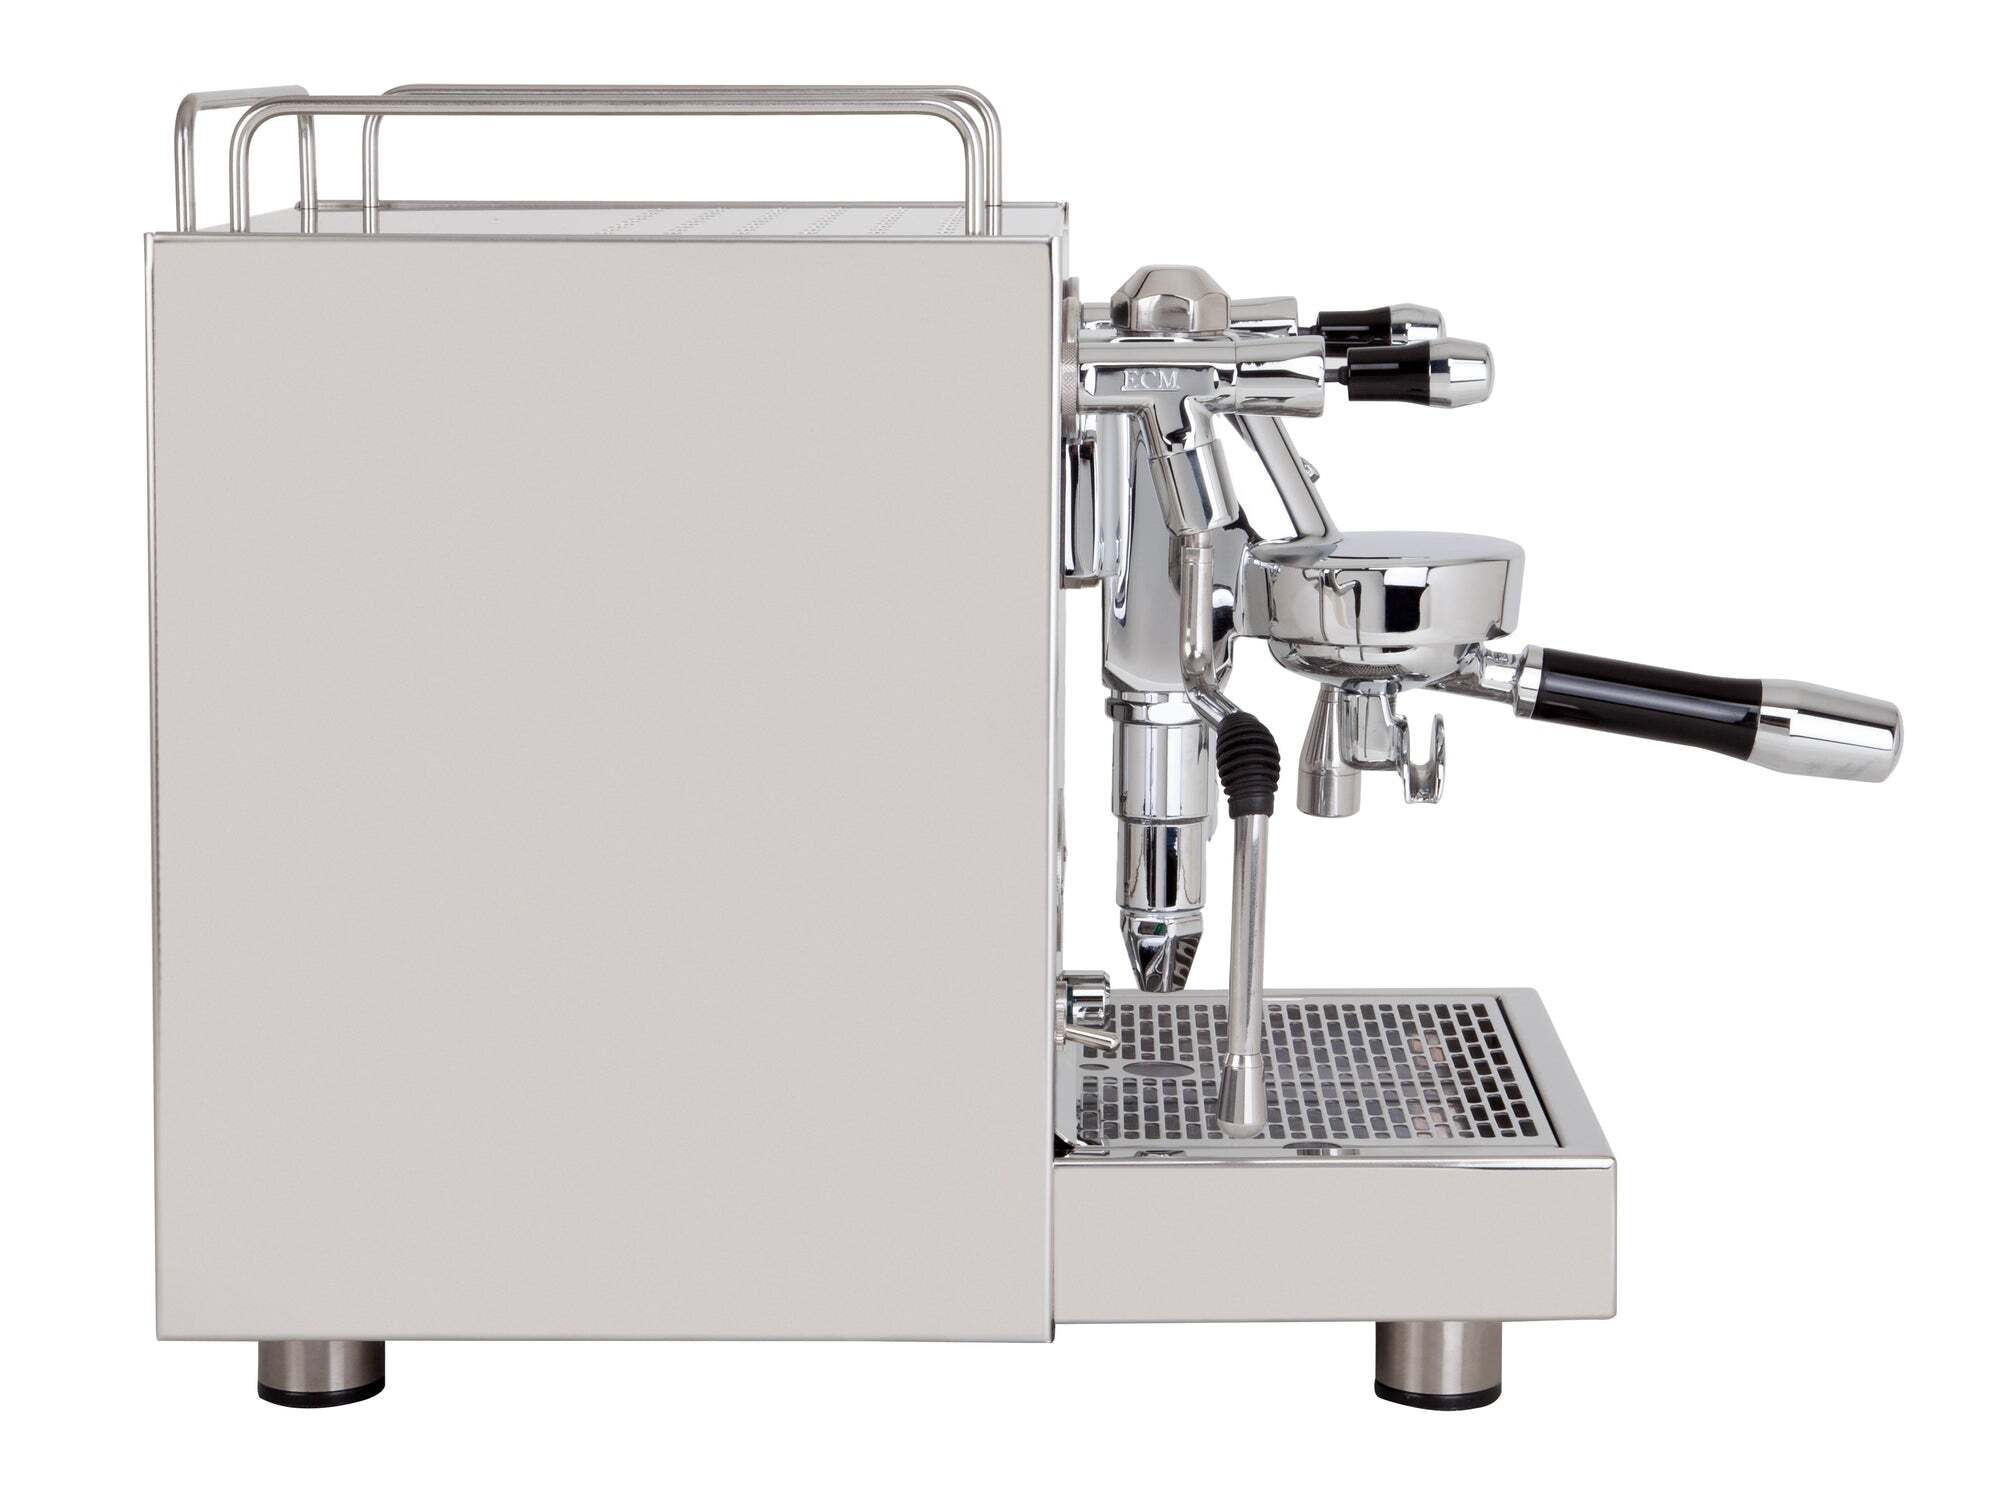 ECM - Mechanika Max Espresso Machine